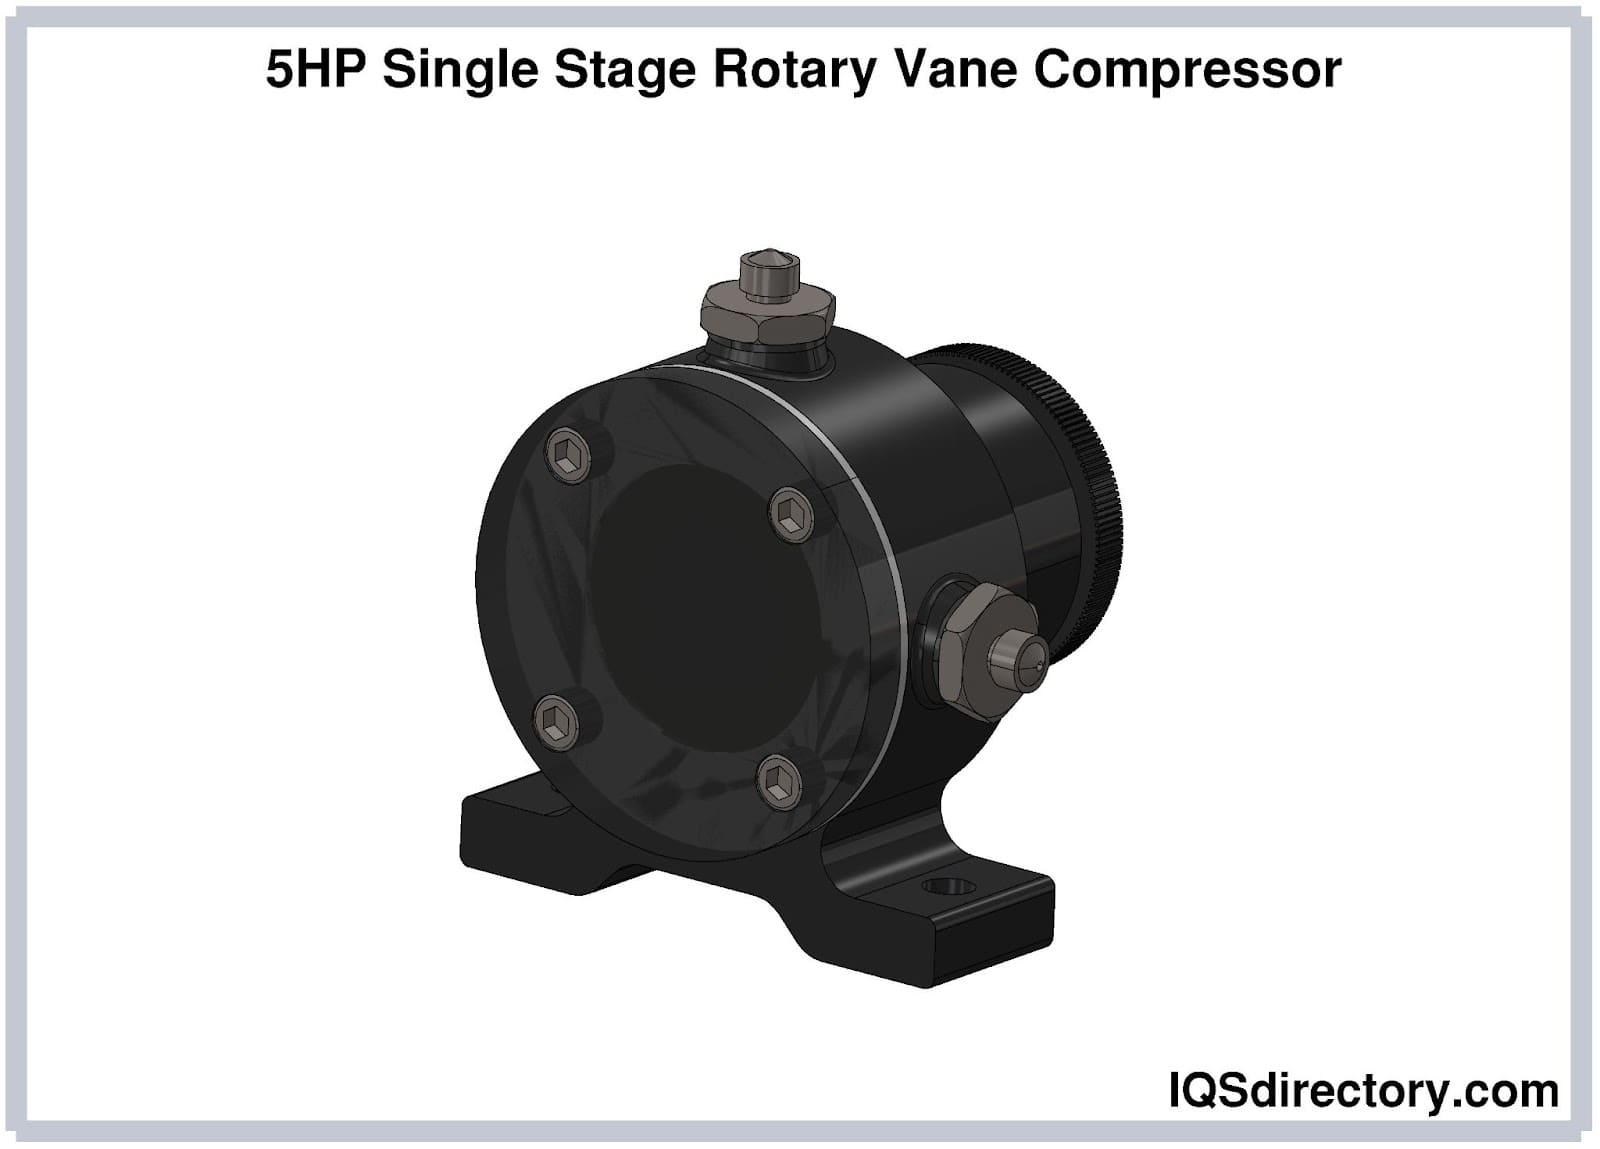 5HP Single Stage Rotary Vane Compressor